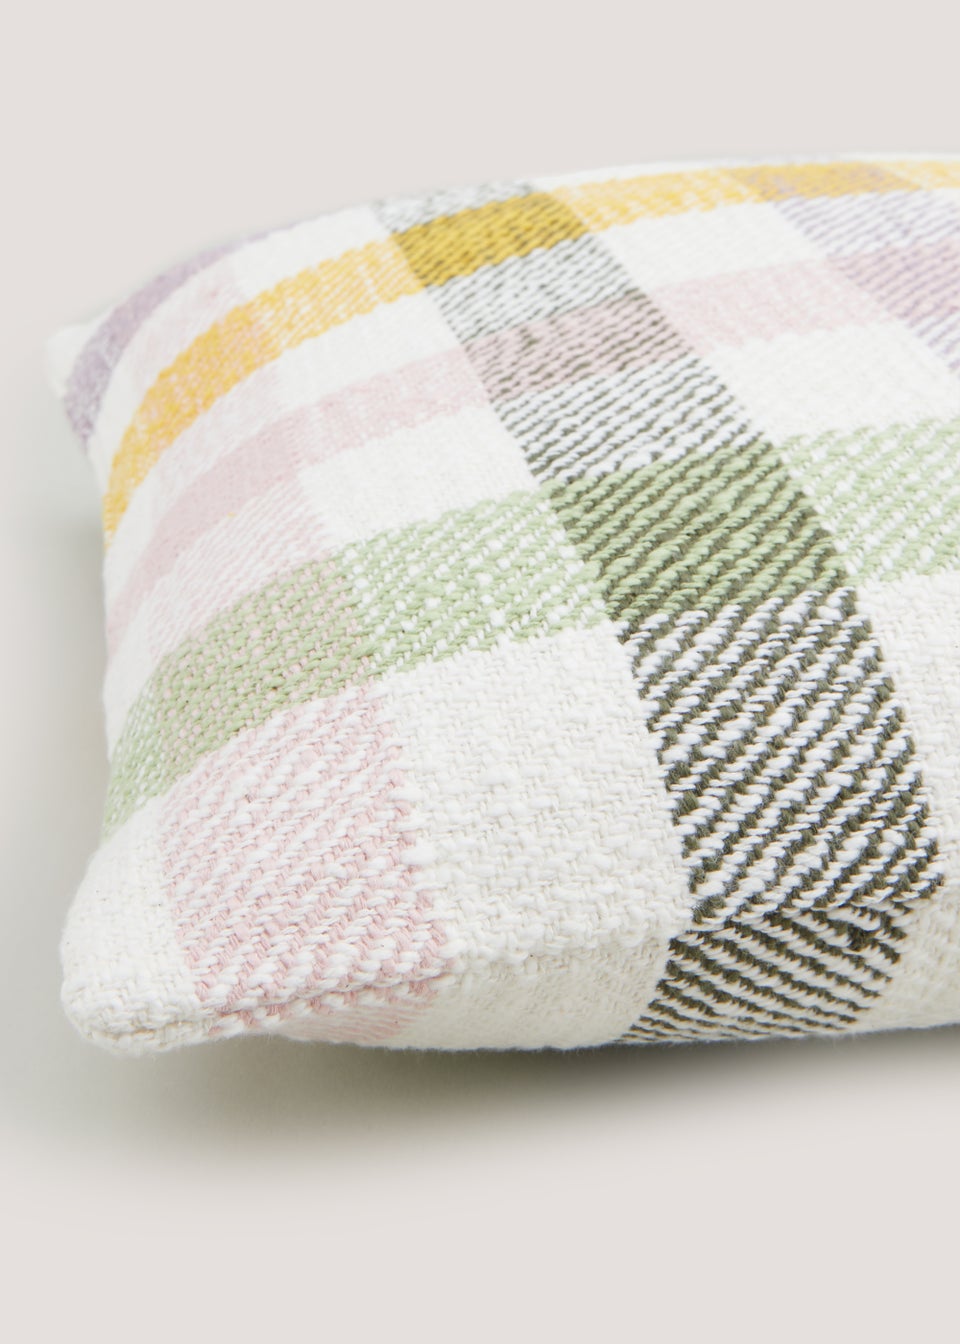 Multicoloured Check Cushion (43cm x 43cm)